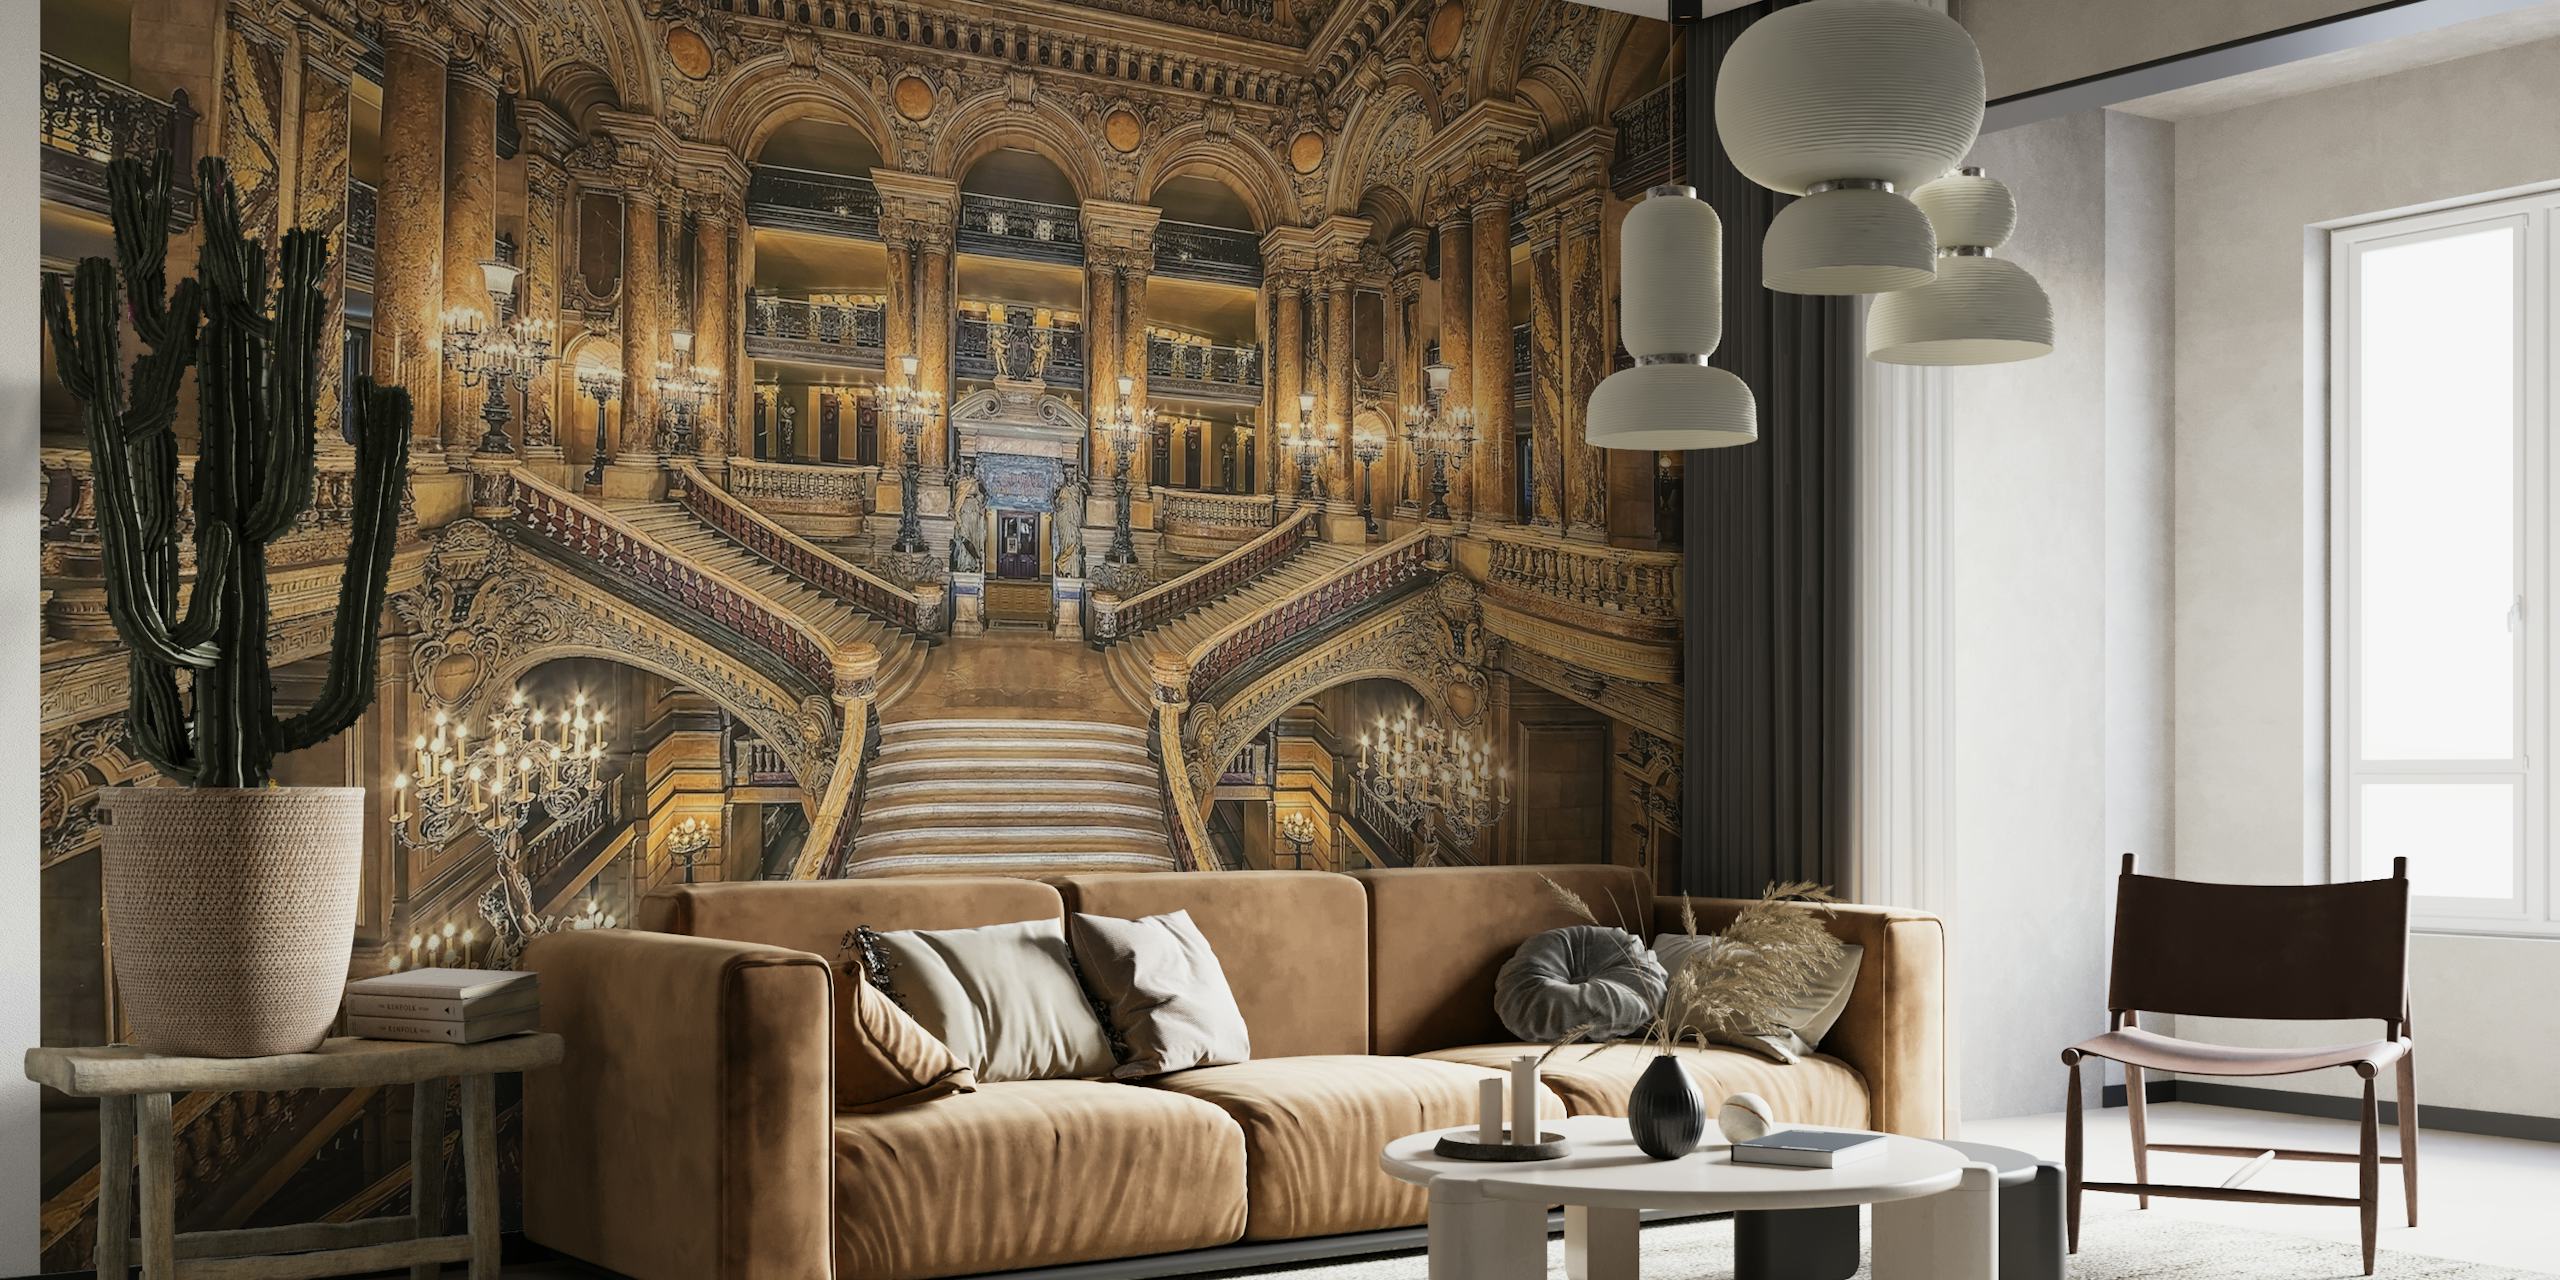 Fototapeta interiéru opery Palais Garnier s velkými schodišti a zlatými ornamenty